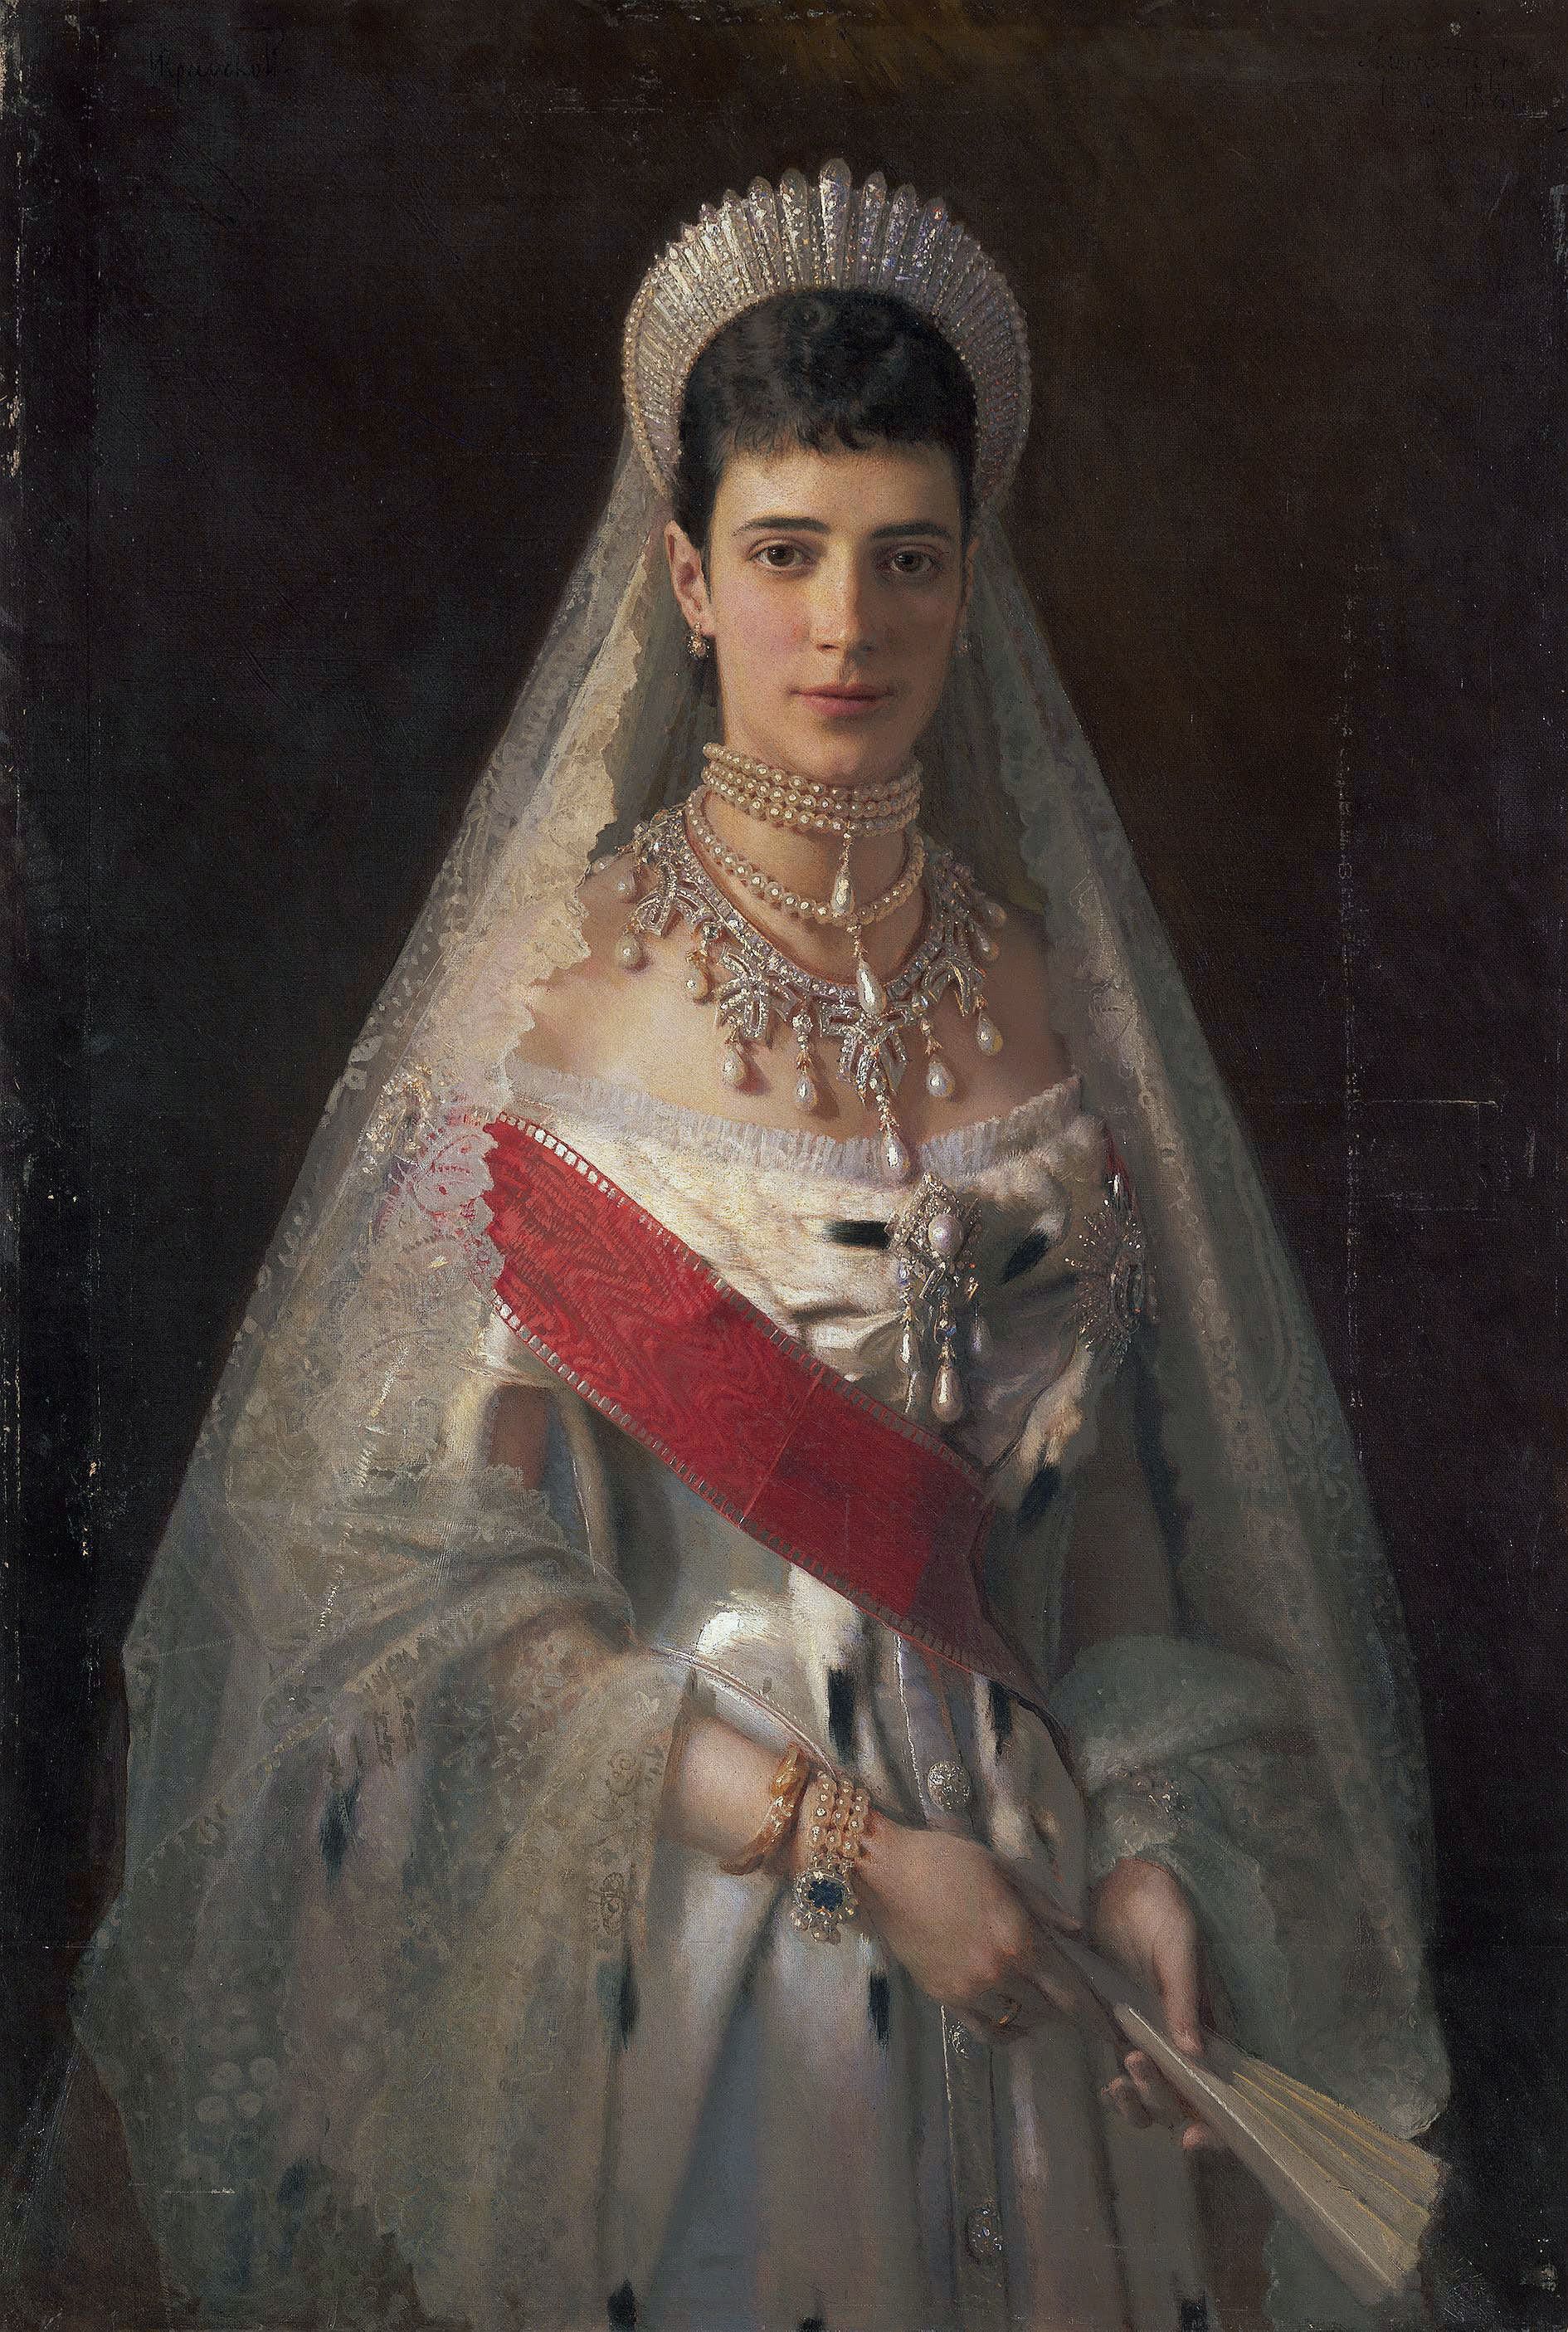 Maria Fyodorovna, born Princess Dagmar of Denmark , wife of Russian tsar Alexander III and mother of Tsar Nicholas II. Her sister married Queen Victoria’s oldest son, Albert Edward. By Ivan Kramskoi, 1881.